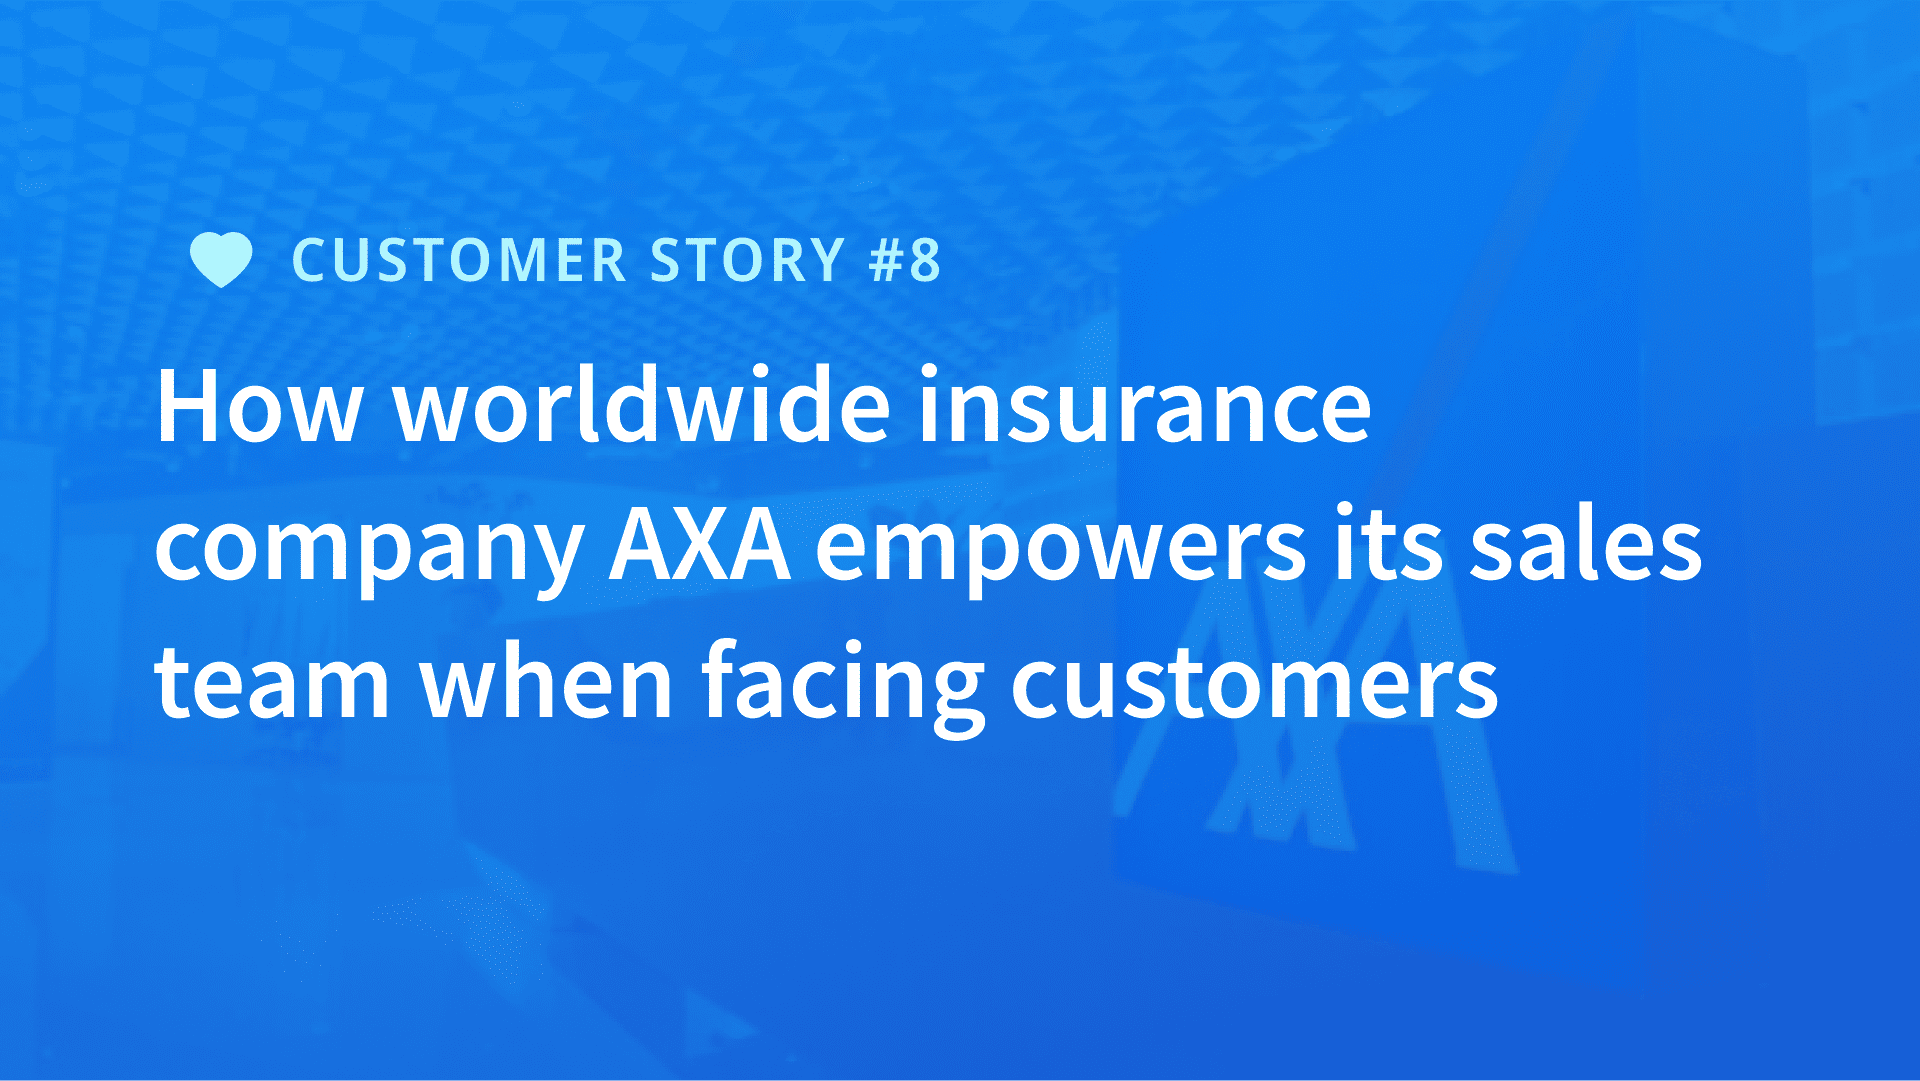 How worldwide insurance company AXA empowers its sales team when facing customers